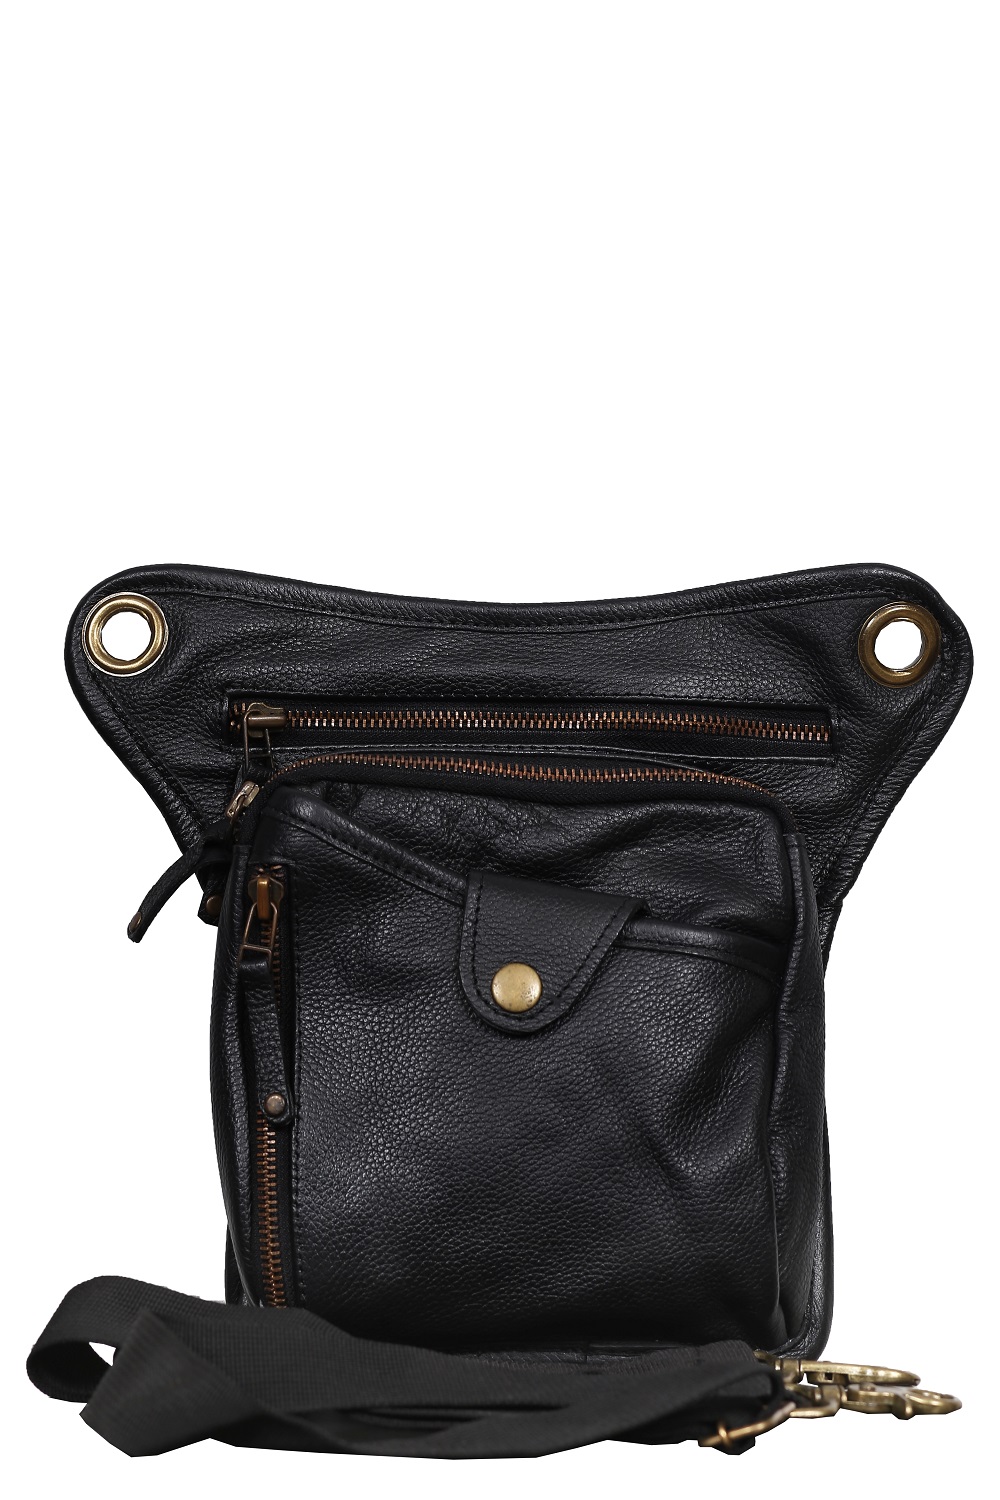 Holster Travel Handmade Bag, Black Leather Unisex Hip Bag, Funny Backpack Waist Bag, Cross Body Bag, Holster Leather Backpack